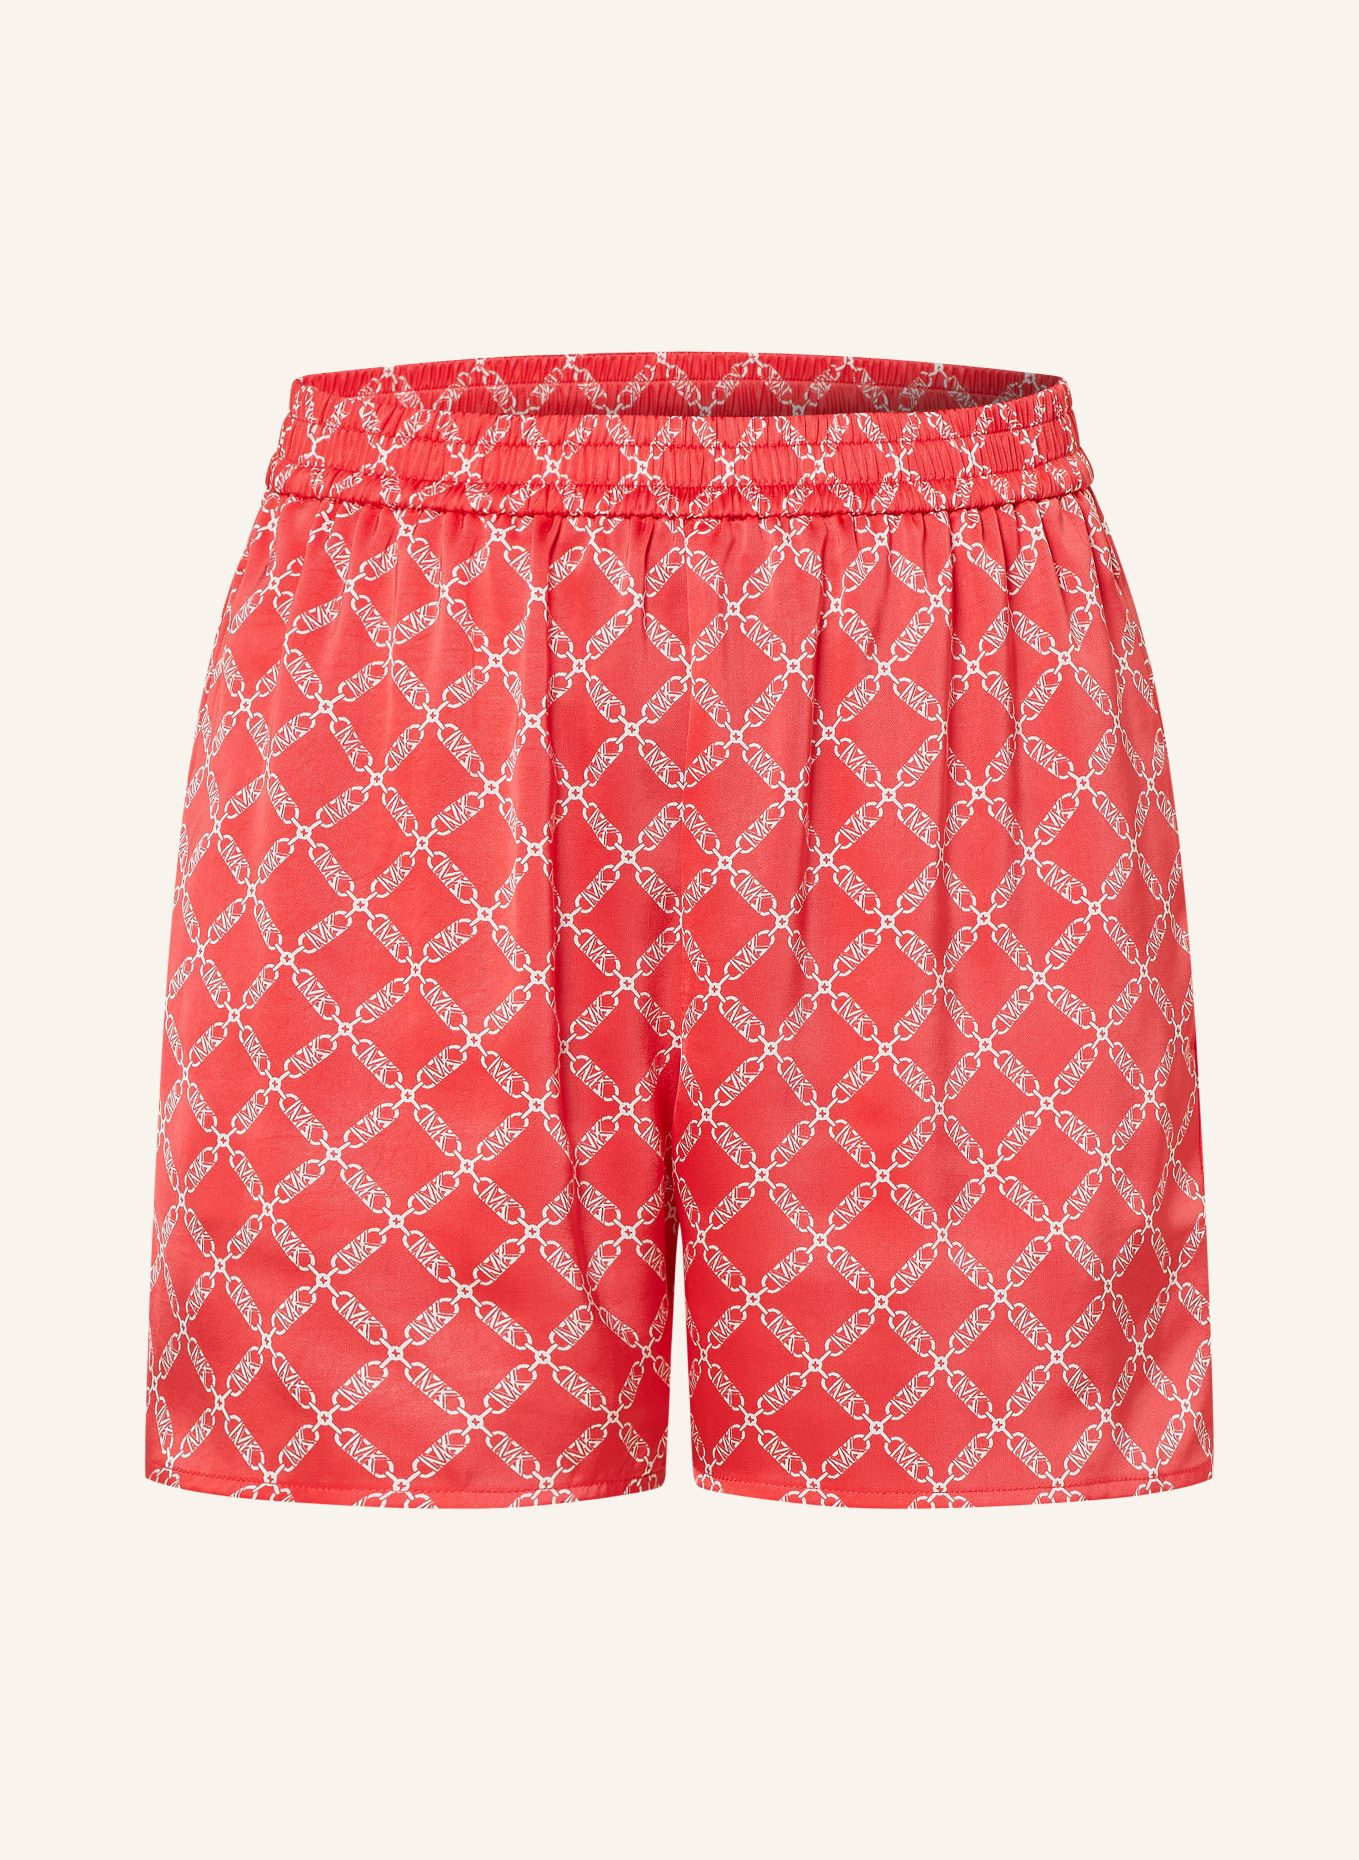 MICHAEL KORS Shorts, Farbe: ROT/ WEISS (Bild 1)